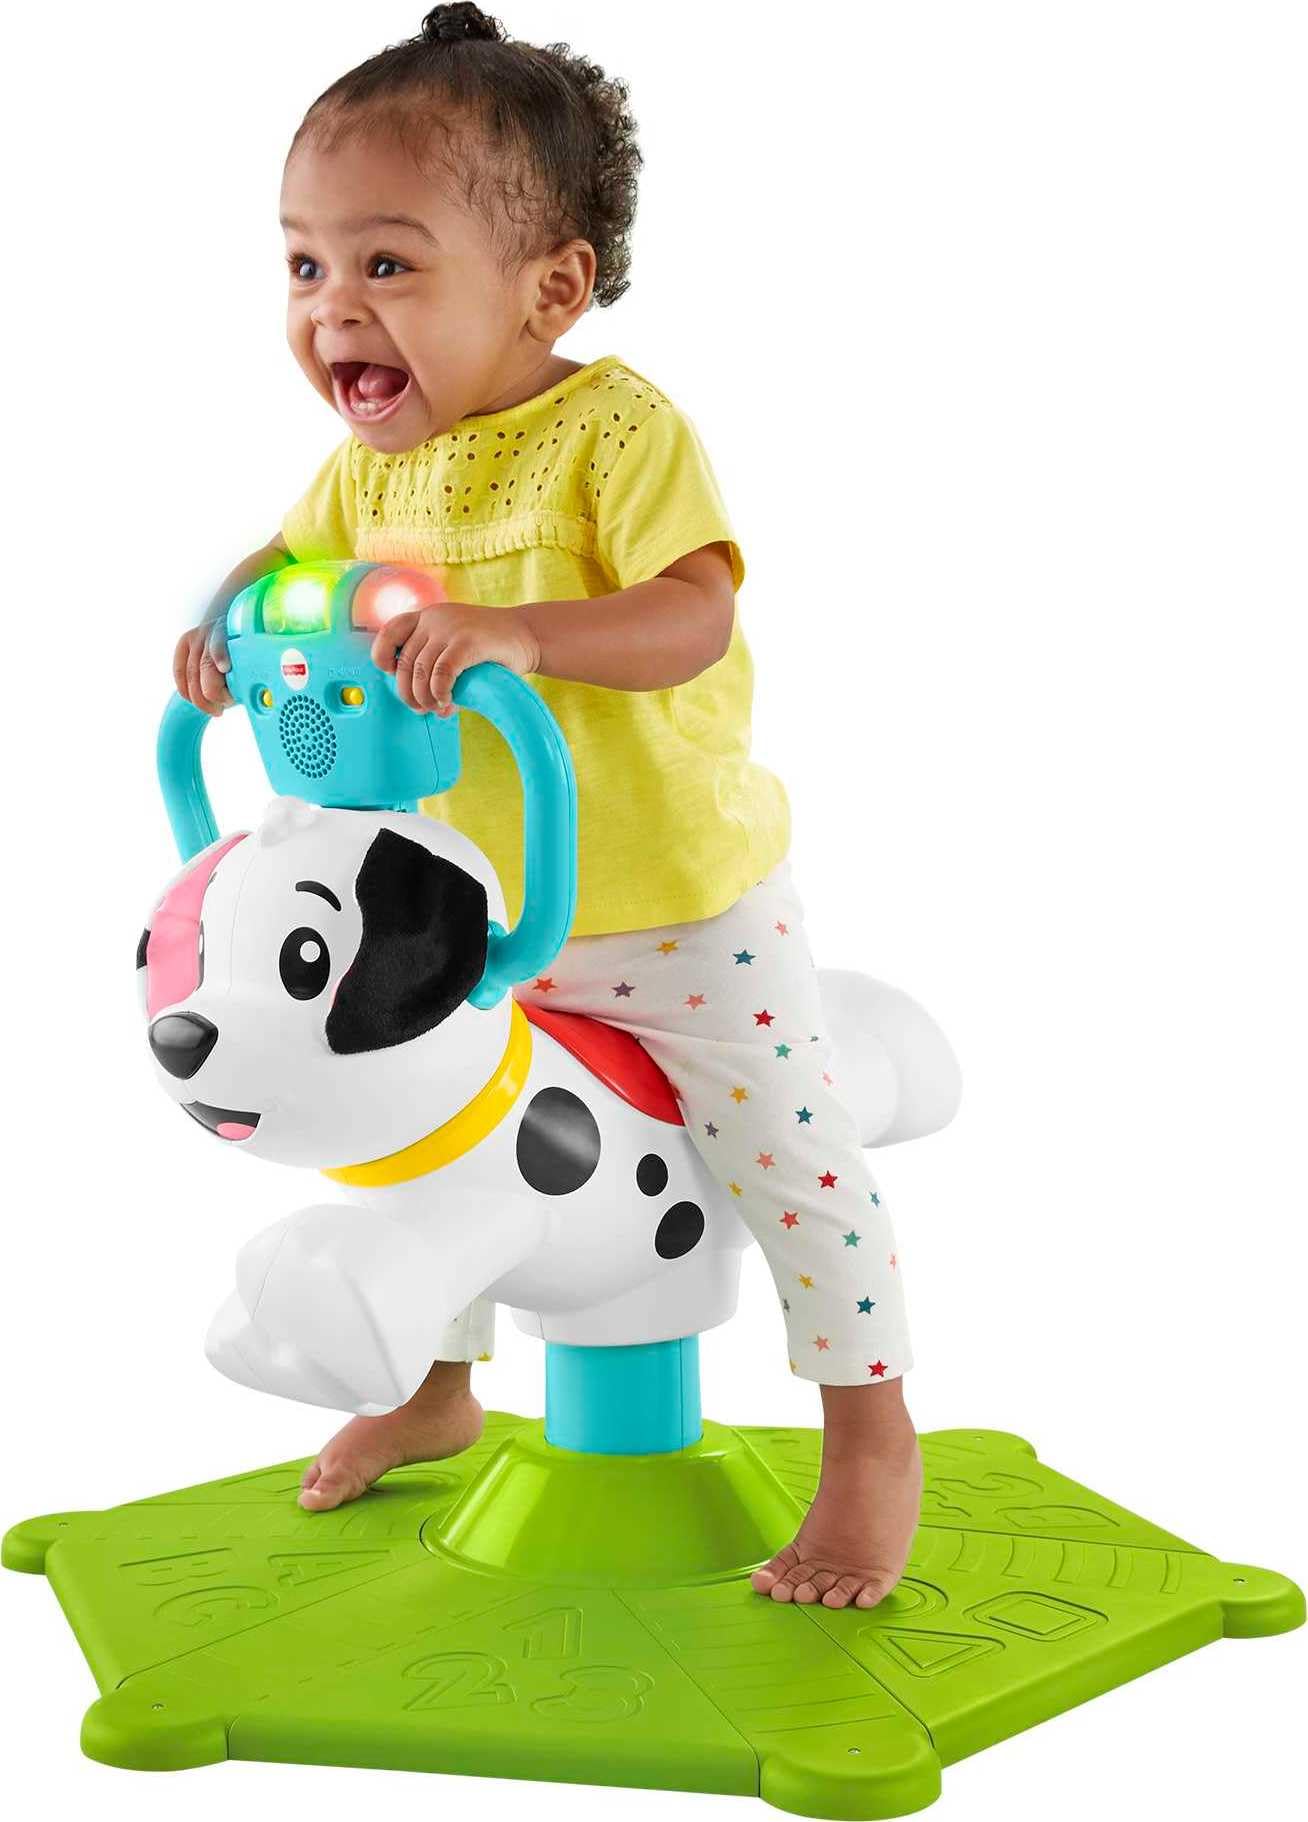 Fisher-Price 幼児用乗用学習玩具、バウンスとスピン子犬固定ミュージカルバウンサー、対象年齢12か月以上の赤ちゃんと幼児用